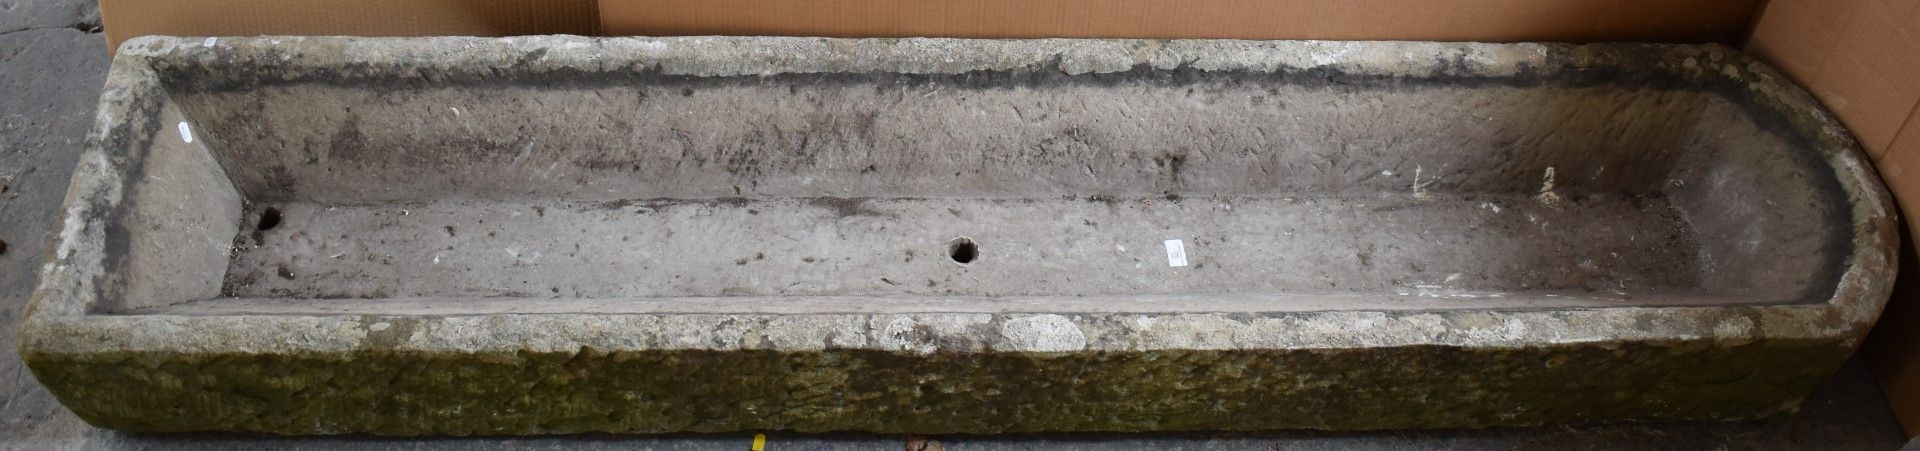 A natural stone trough, W214 x D44 x H20cm